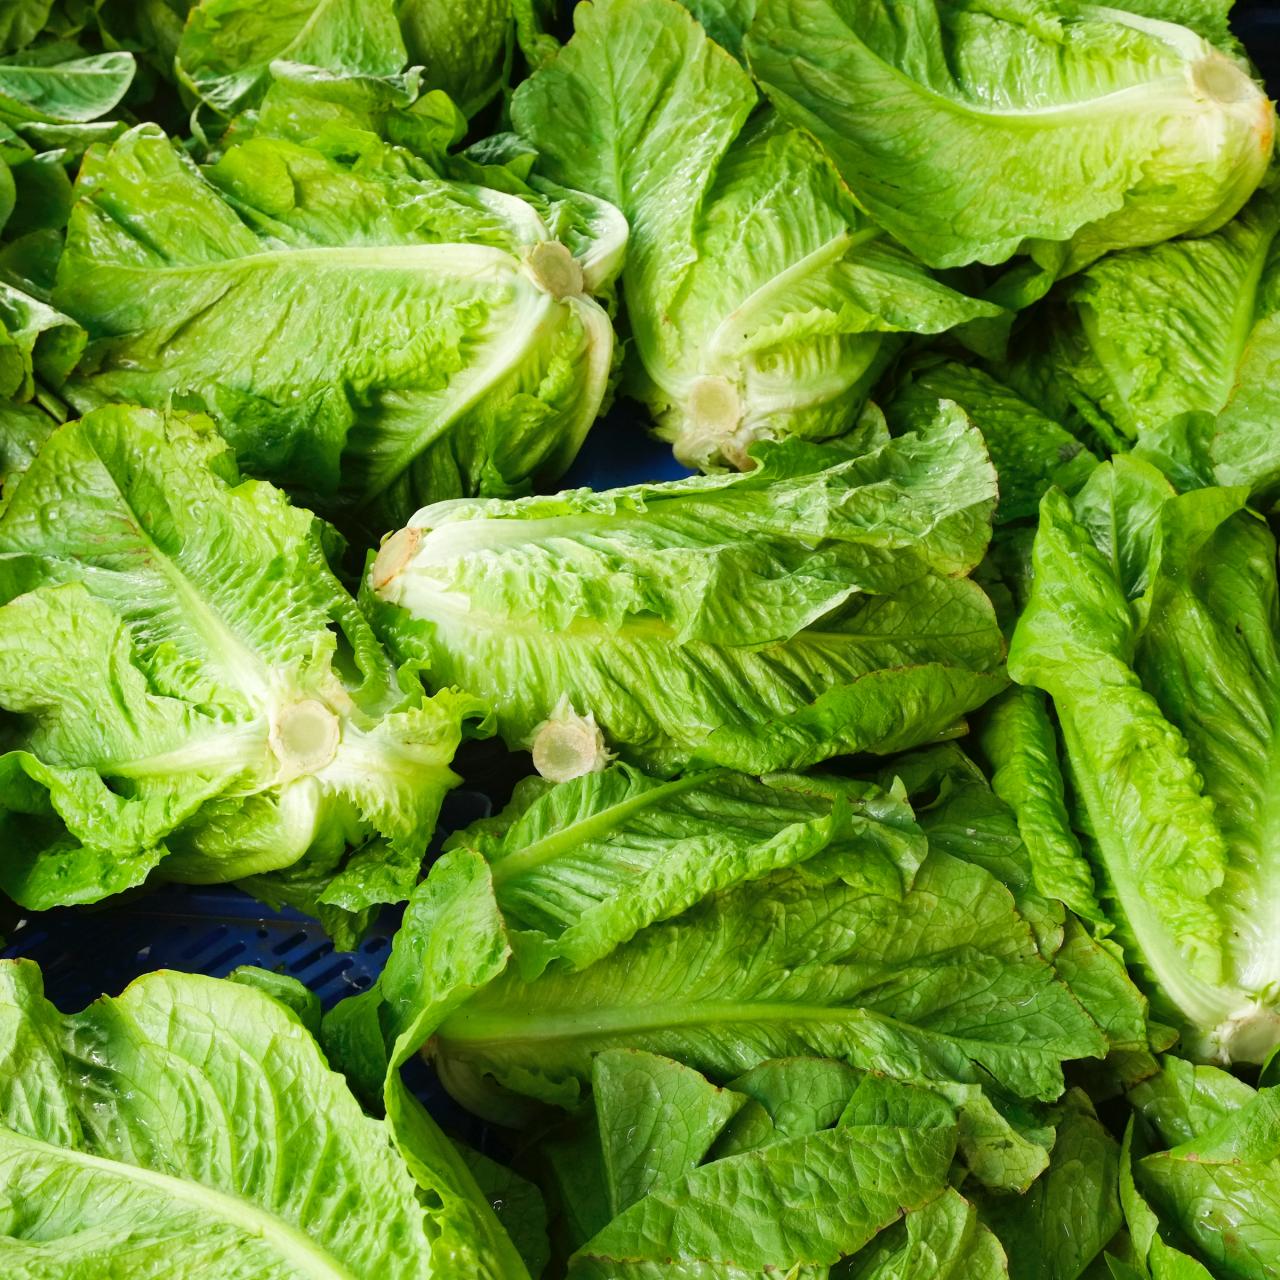 https://food.fnr.sndimg.com/content/dam/images/food/fullset/2020/03/23/FN_stock-art-getty-romaine-lettuce_s6x4.jpg.rend.hgtvcom.1280.1280.suffix/1584990138440.jpeg